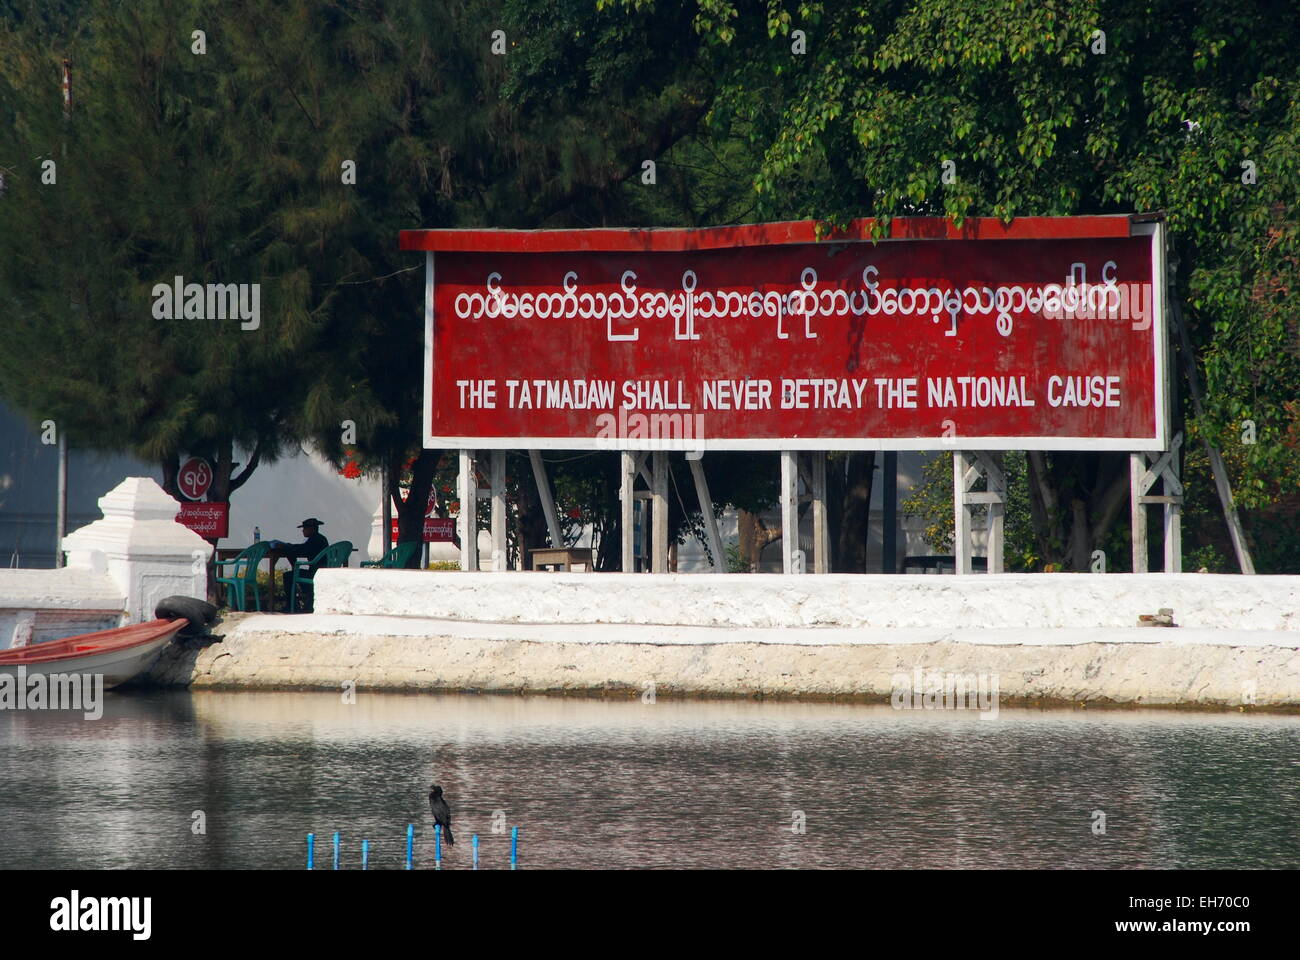 Tatmadaw (Army) Propaganda Poster titled "The Tatmadaw shall never betray the national cause", Mandalay Stock Photo